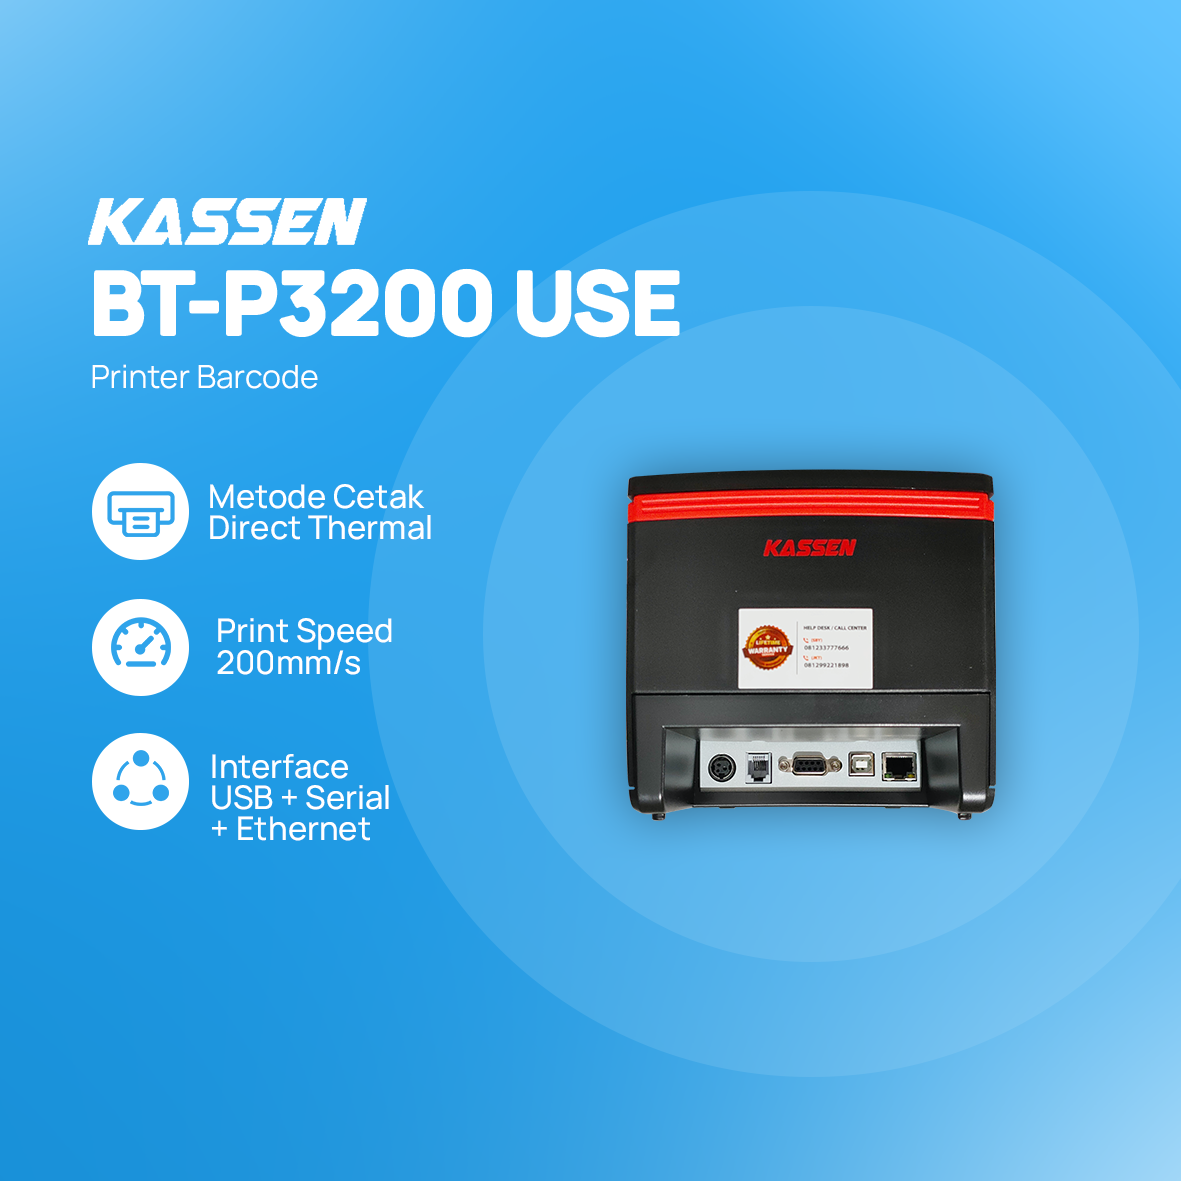 Printer Kasir Kassen BT-P3200 USE